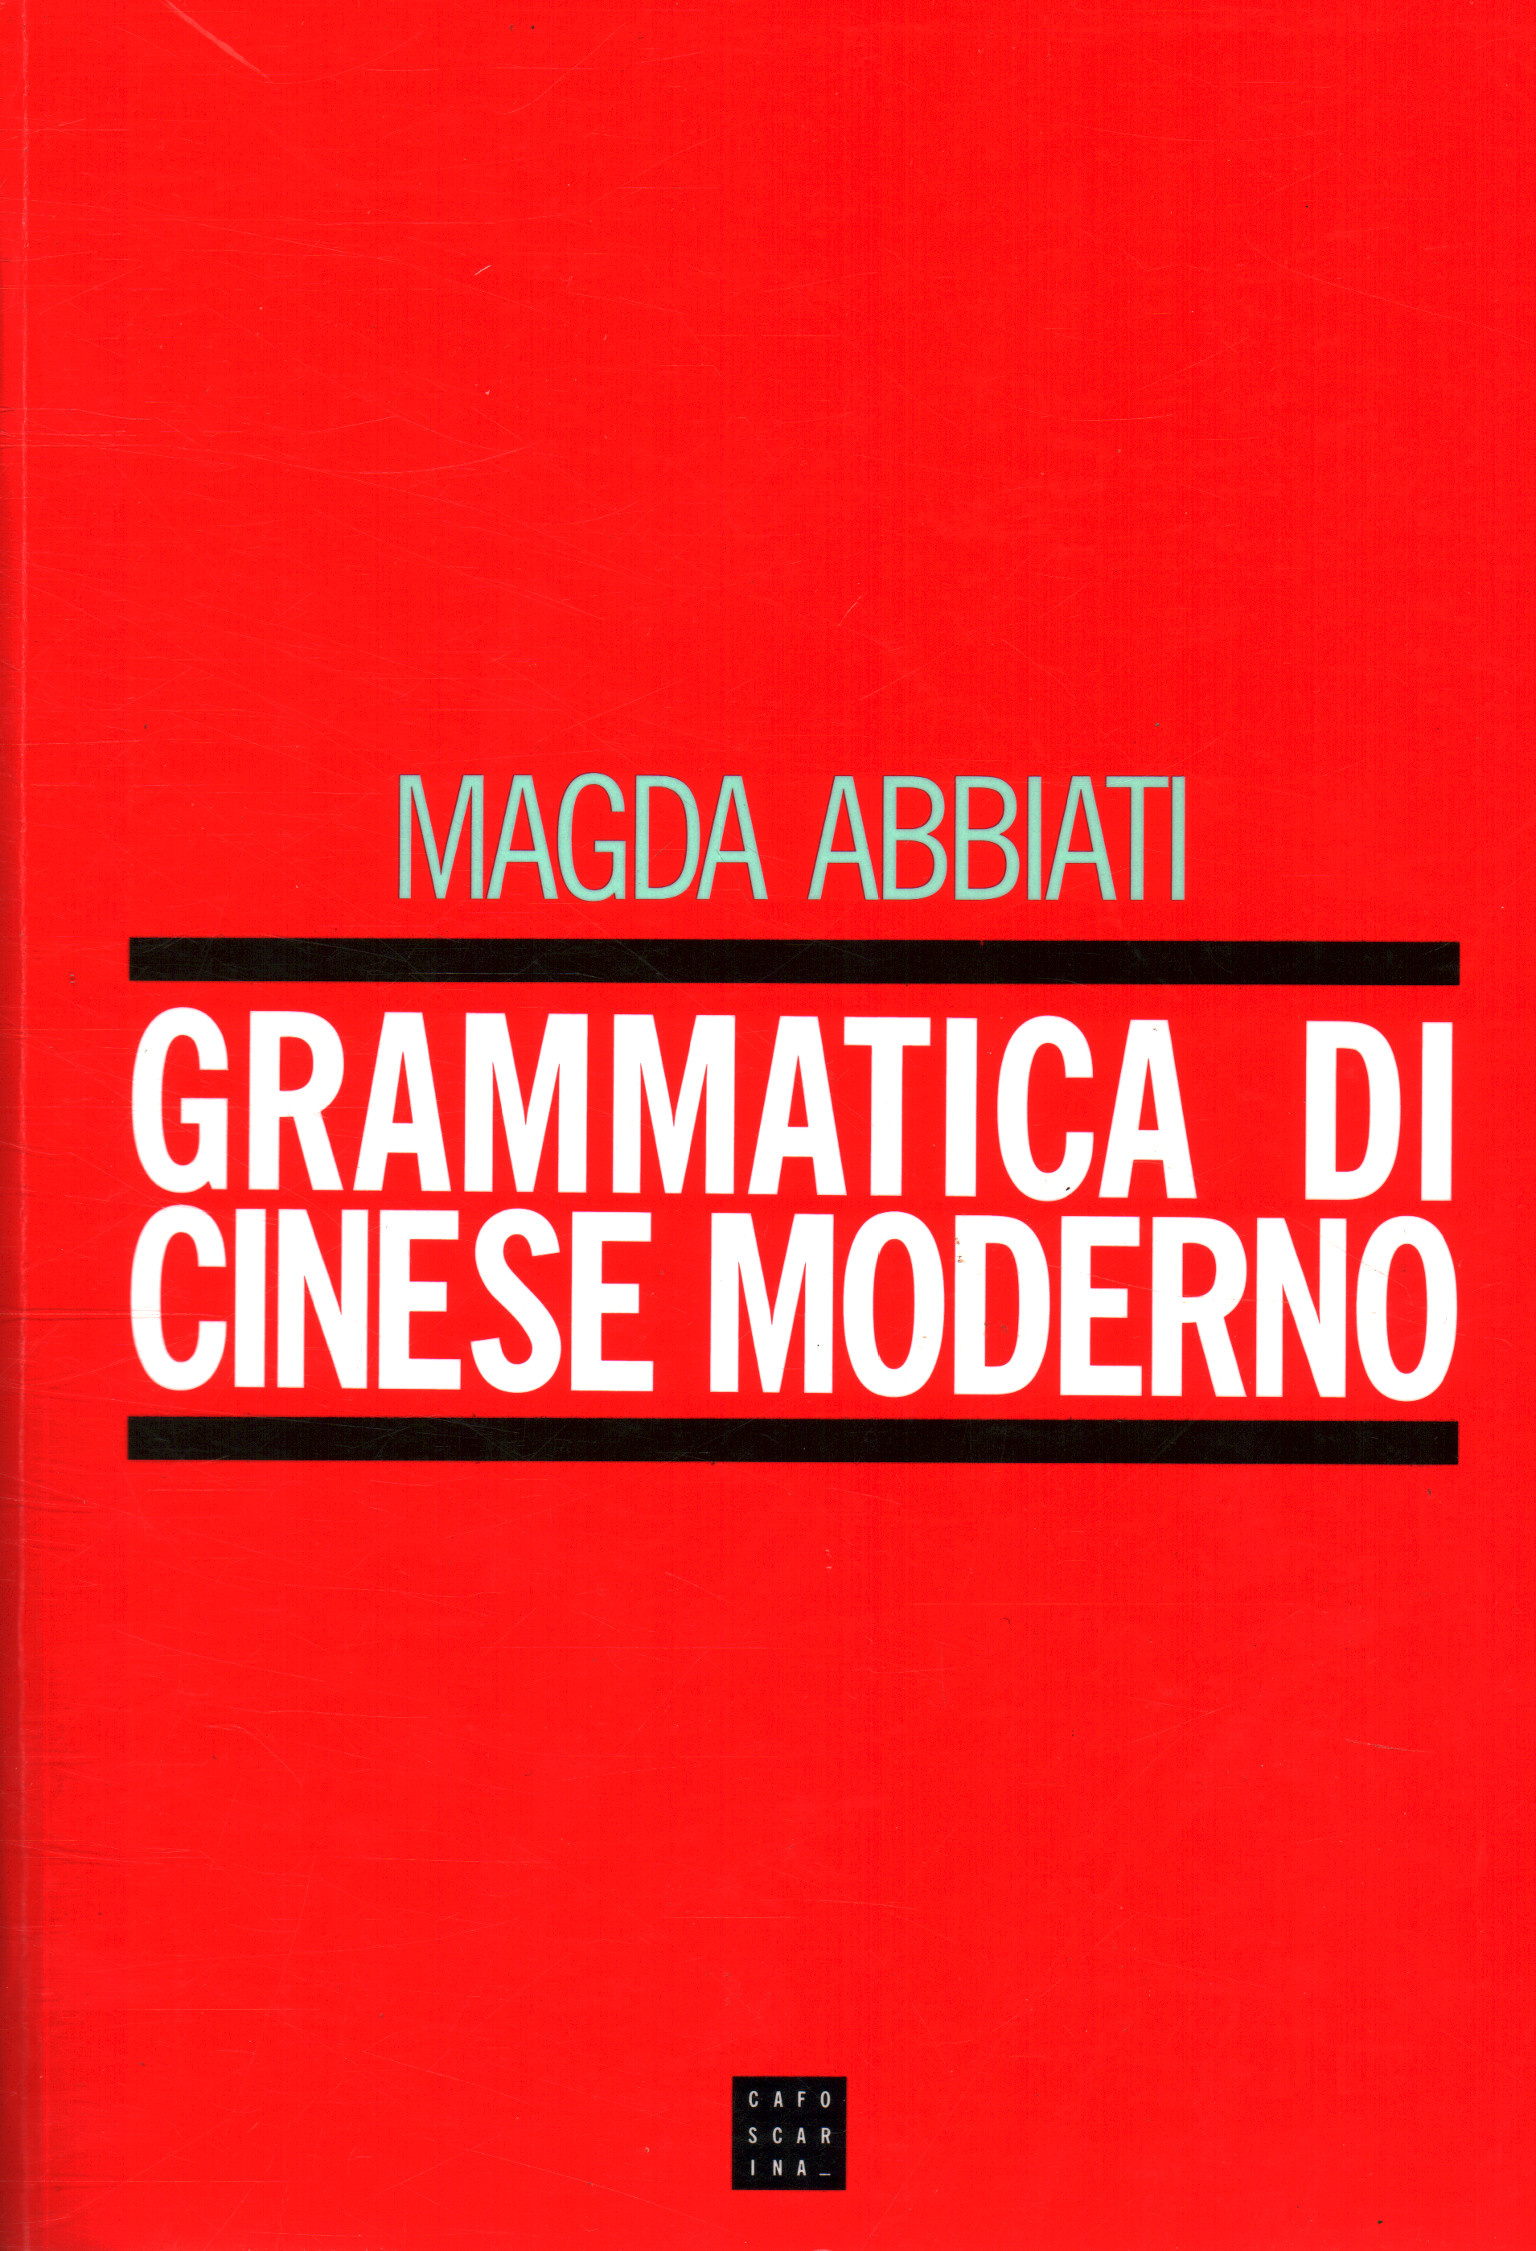 Grammaire chinoise moderne, Magda Abbiati